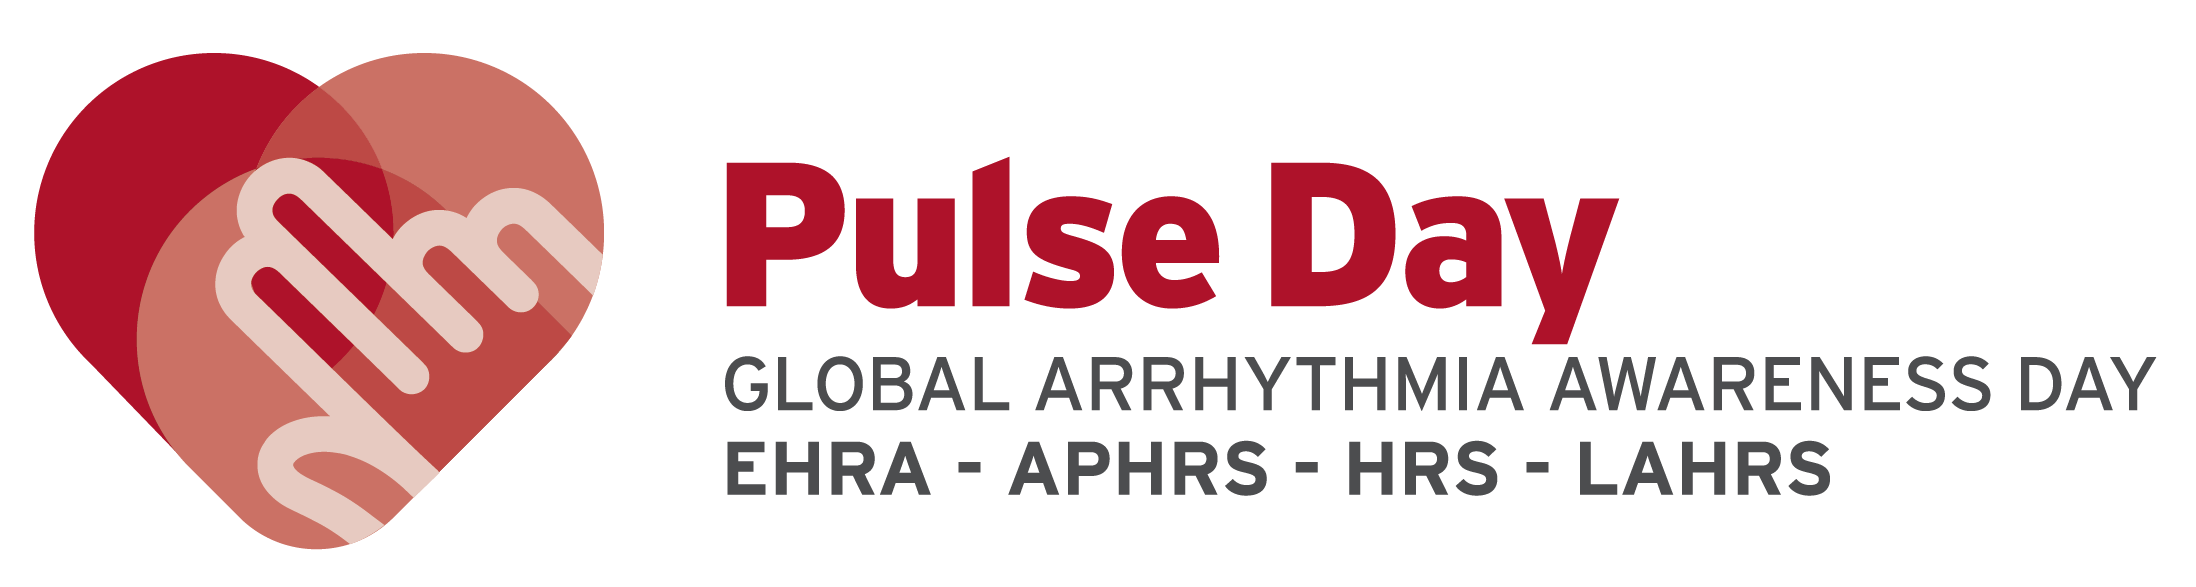 PulseDay_Full_Logo.png